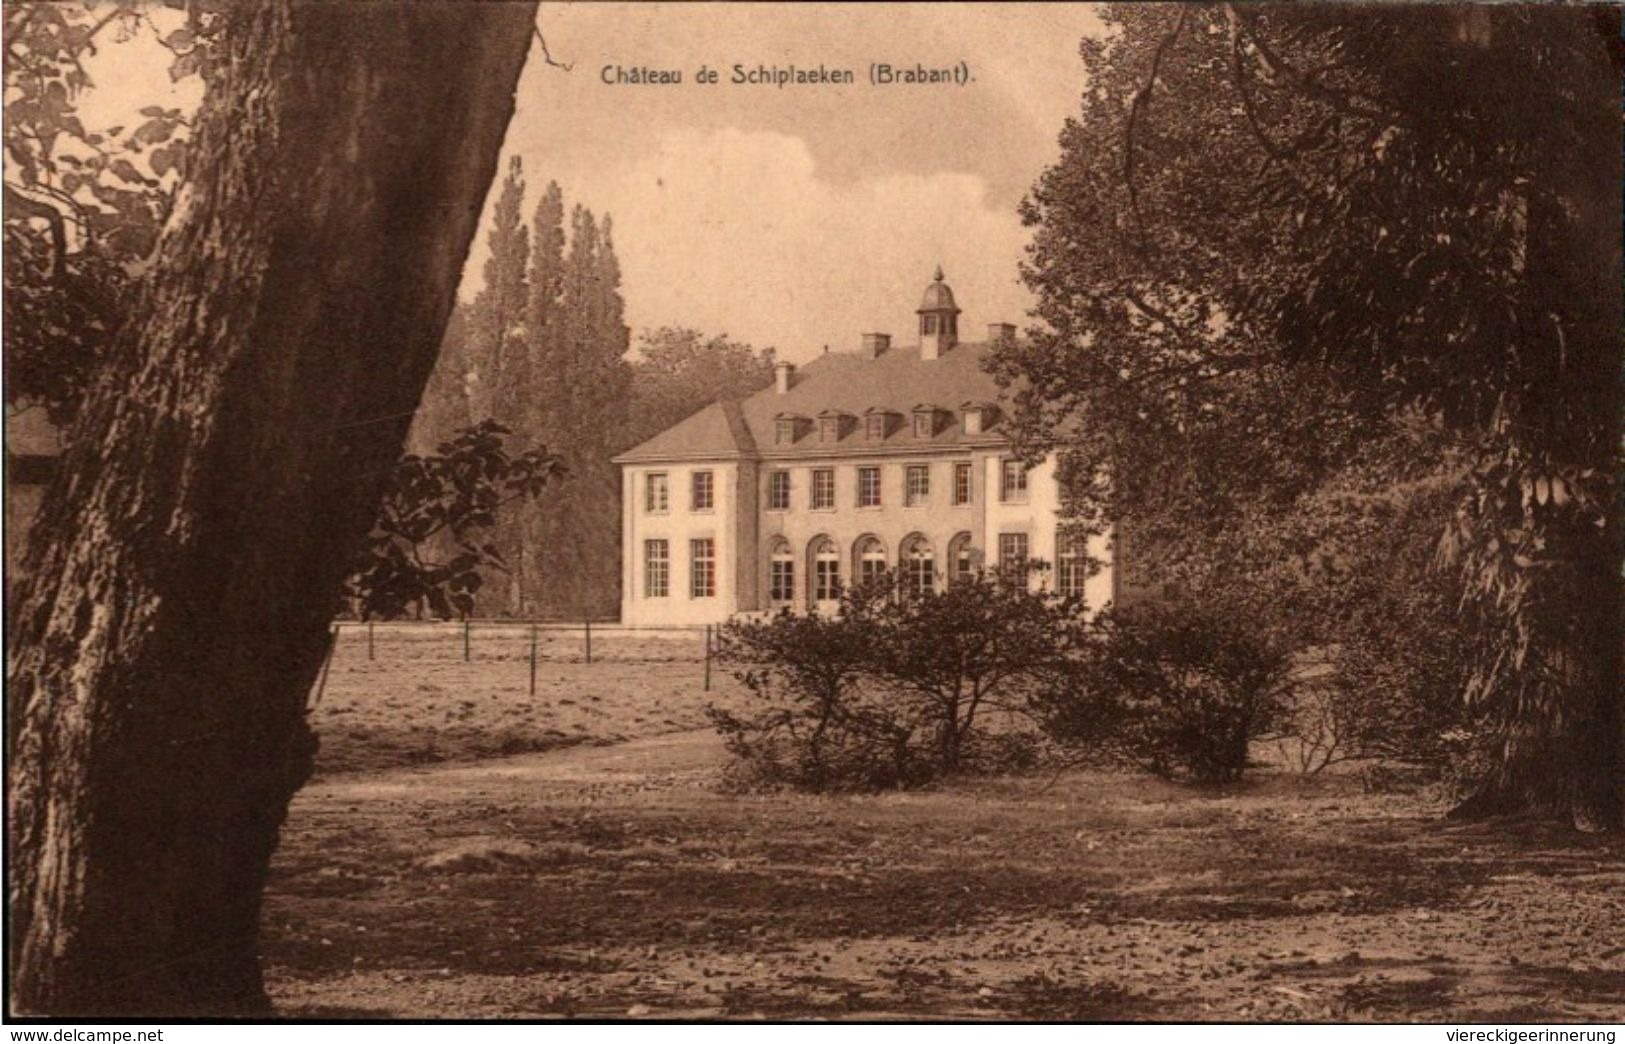 ! Lot of 8 postcards Chateau de Schiplaeken, Brabant, Belgien, Belgium, Adel, royalty, Schloß, Autographs